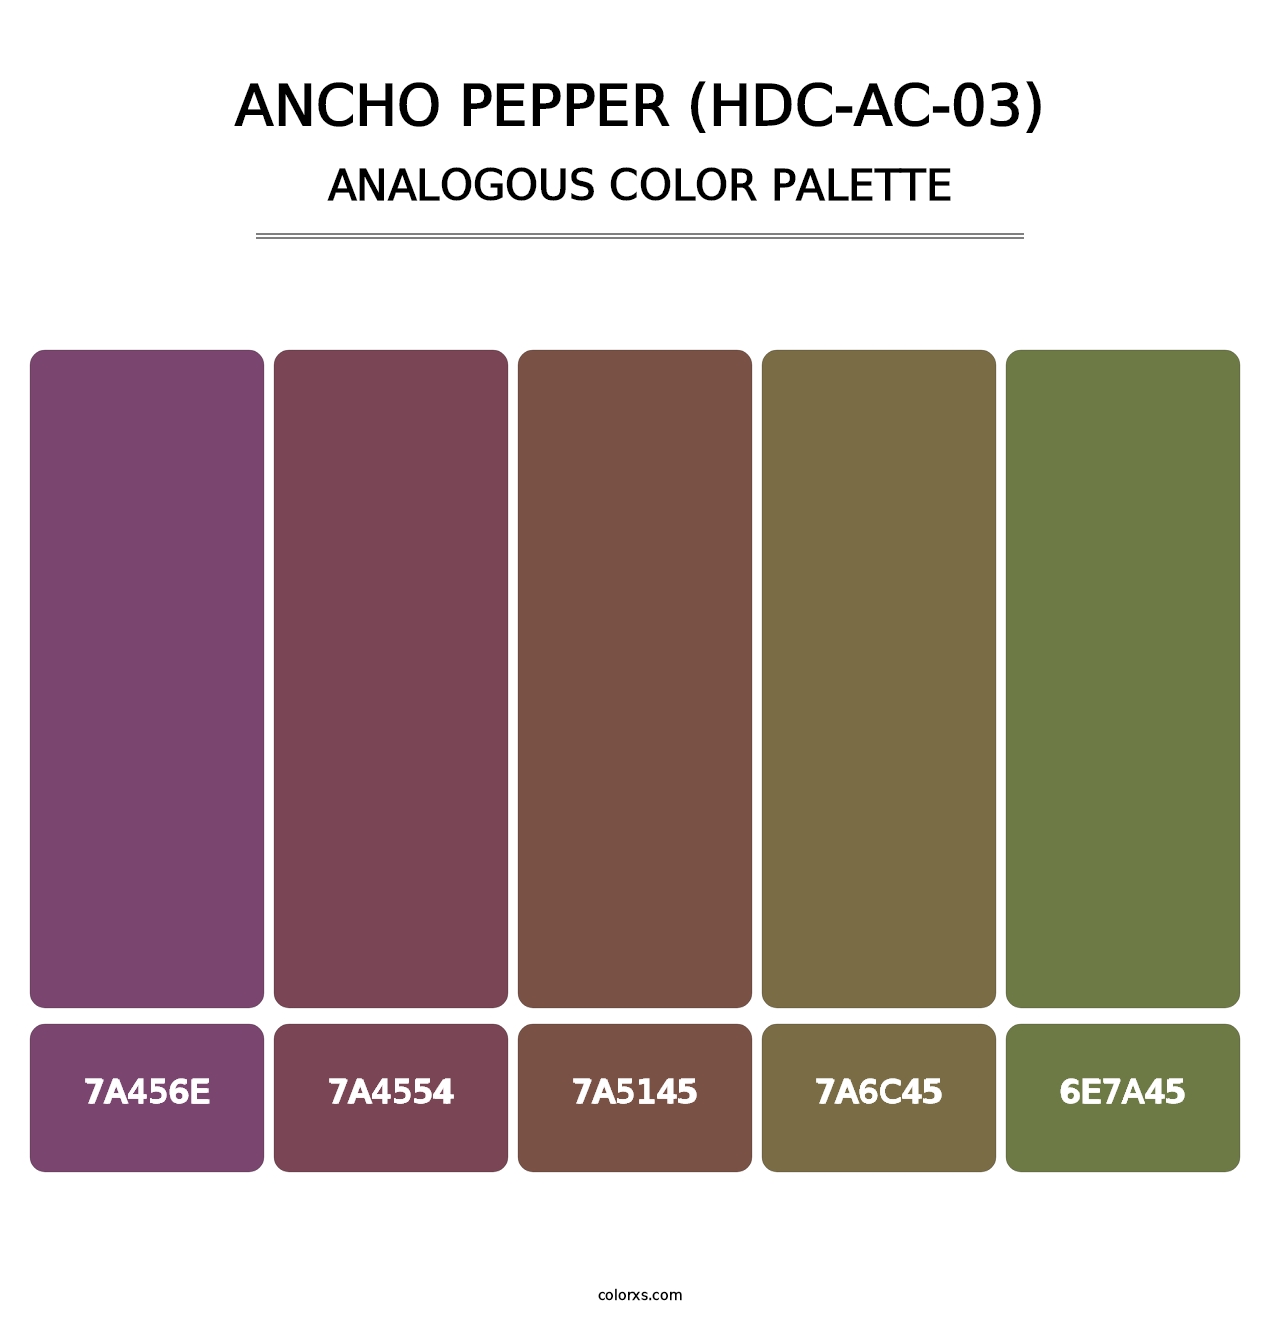 Ancho Pepper (HDC-AC-03) - Analogous Color Palette